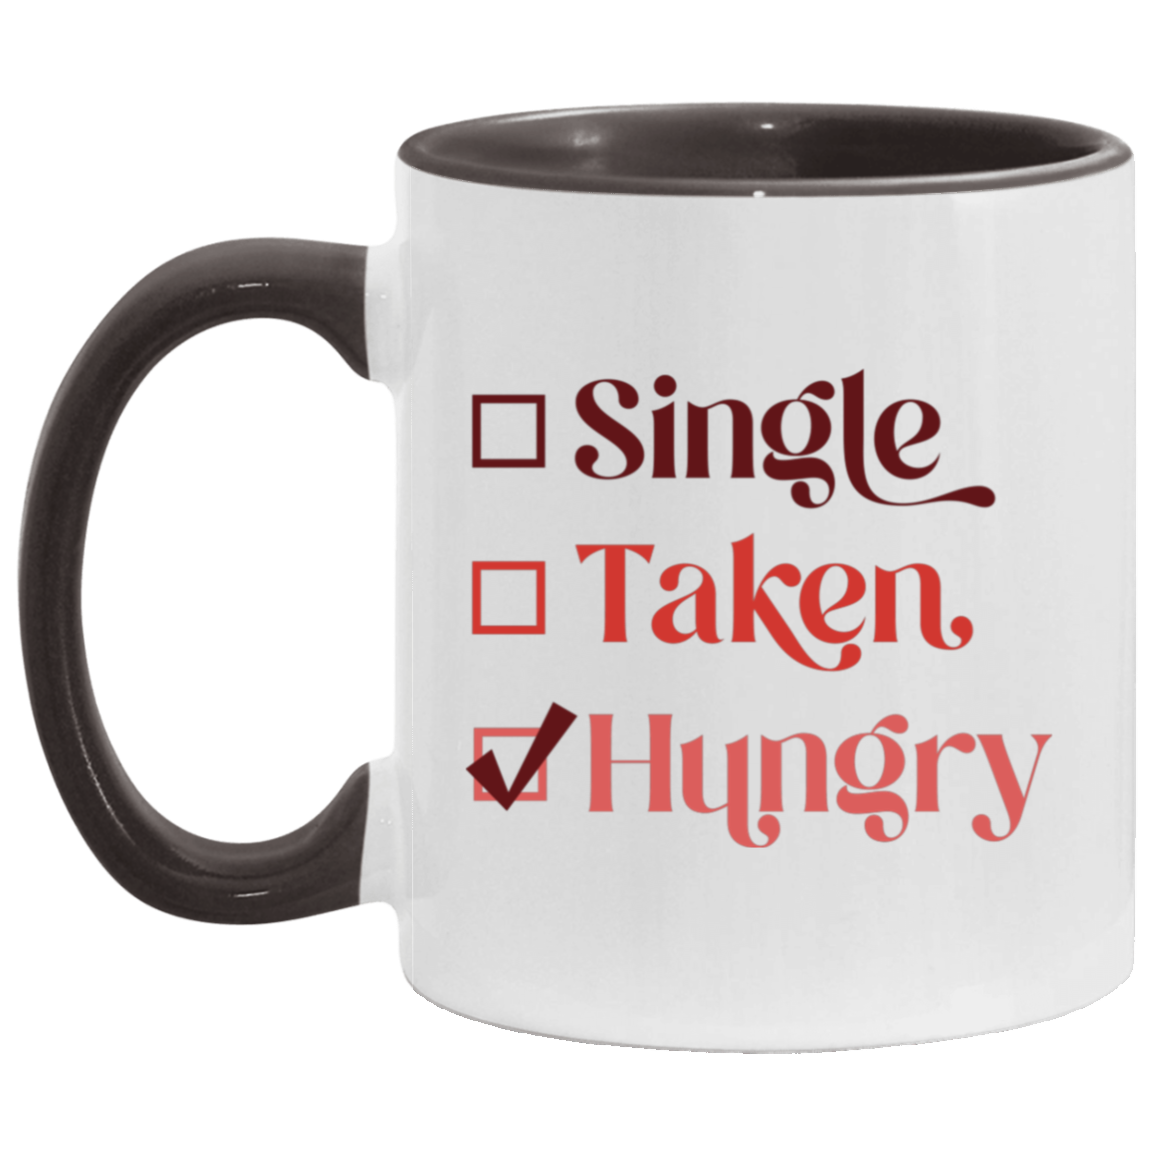 Love Hungry Accent Mug